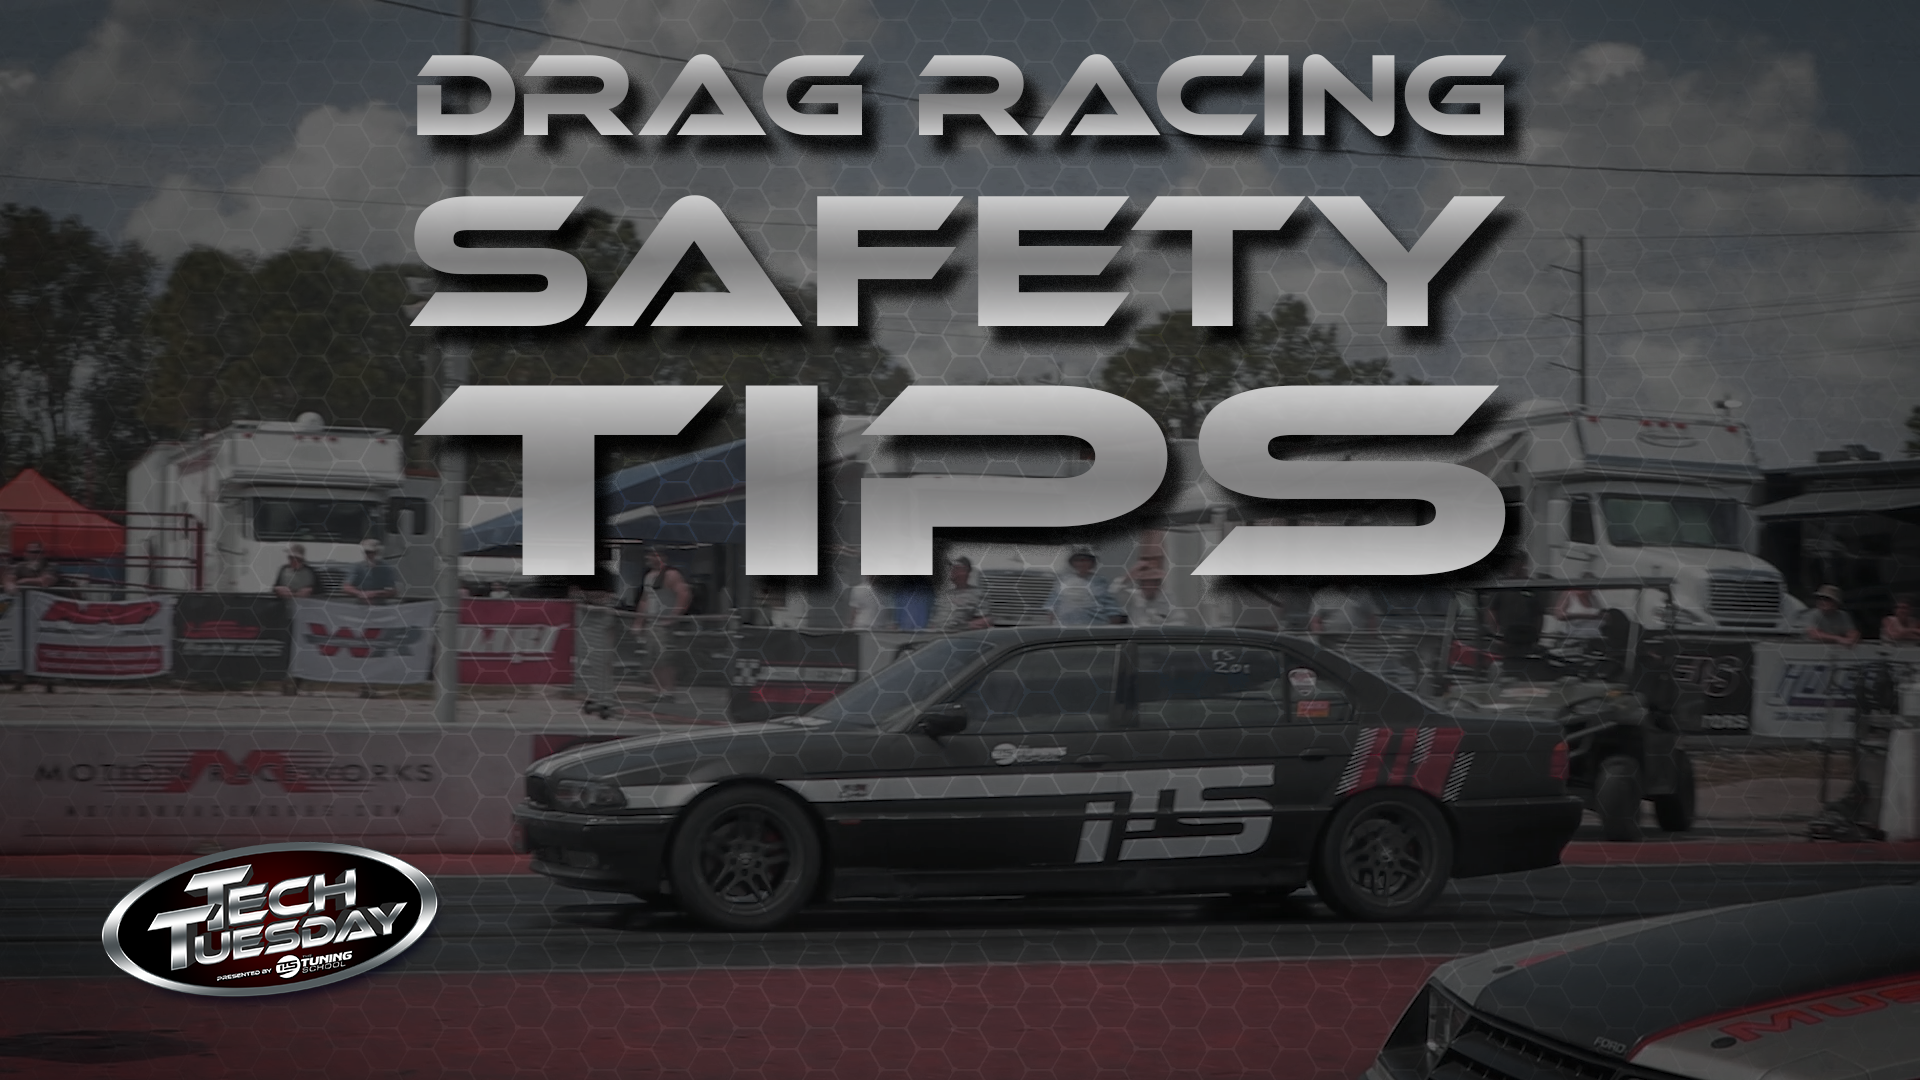 Drag Racing Safety Tips